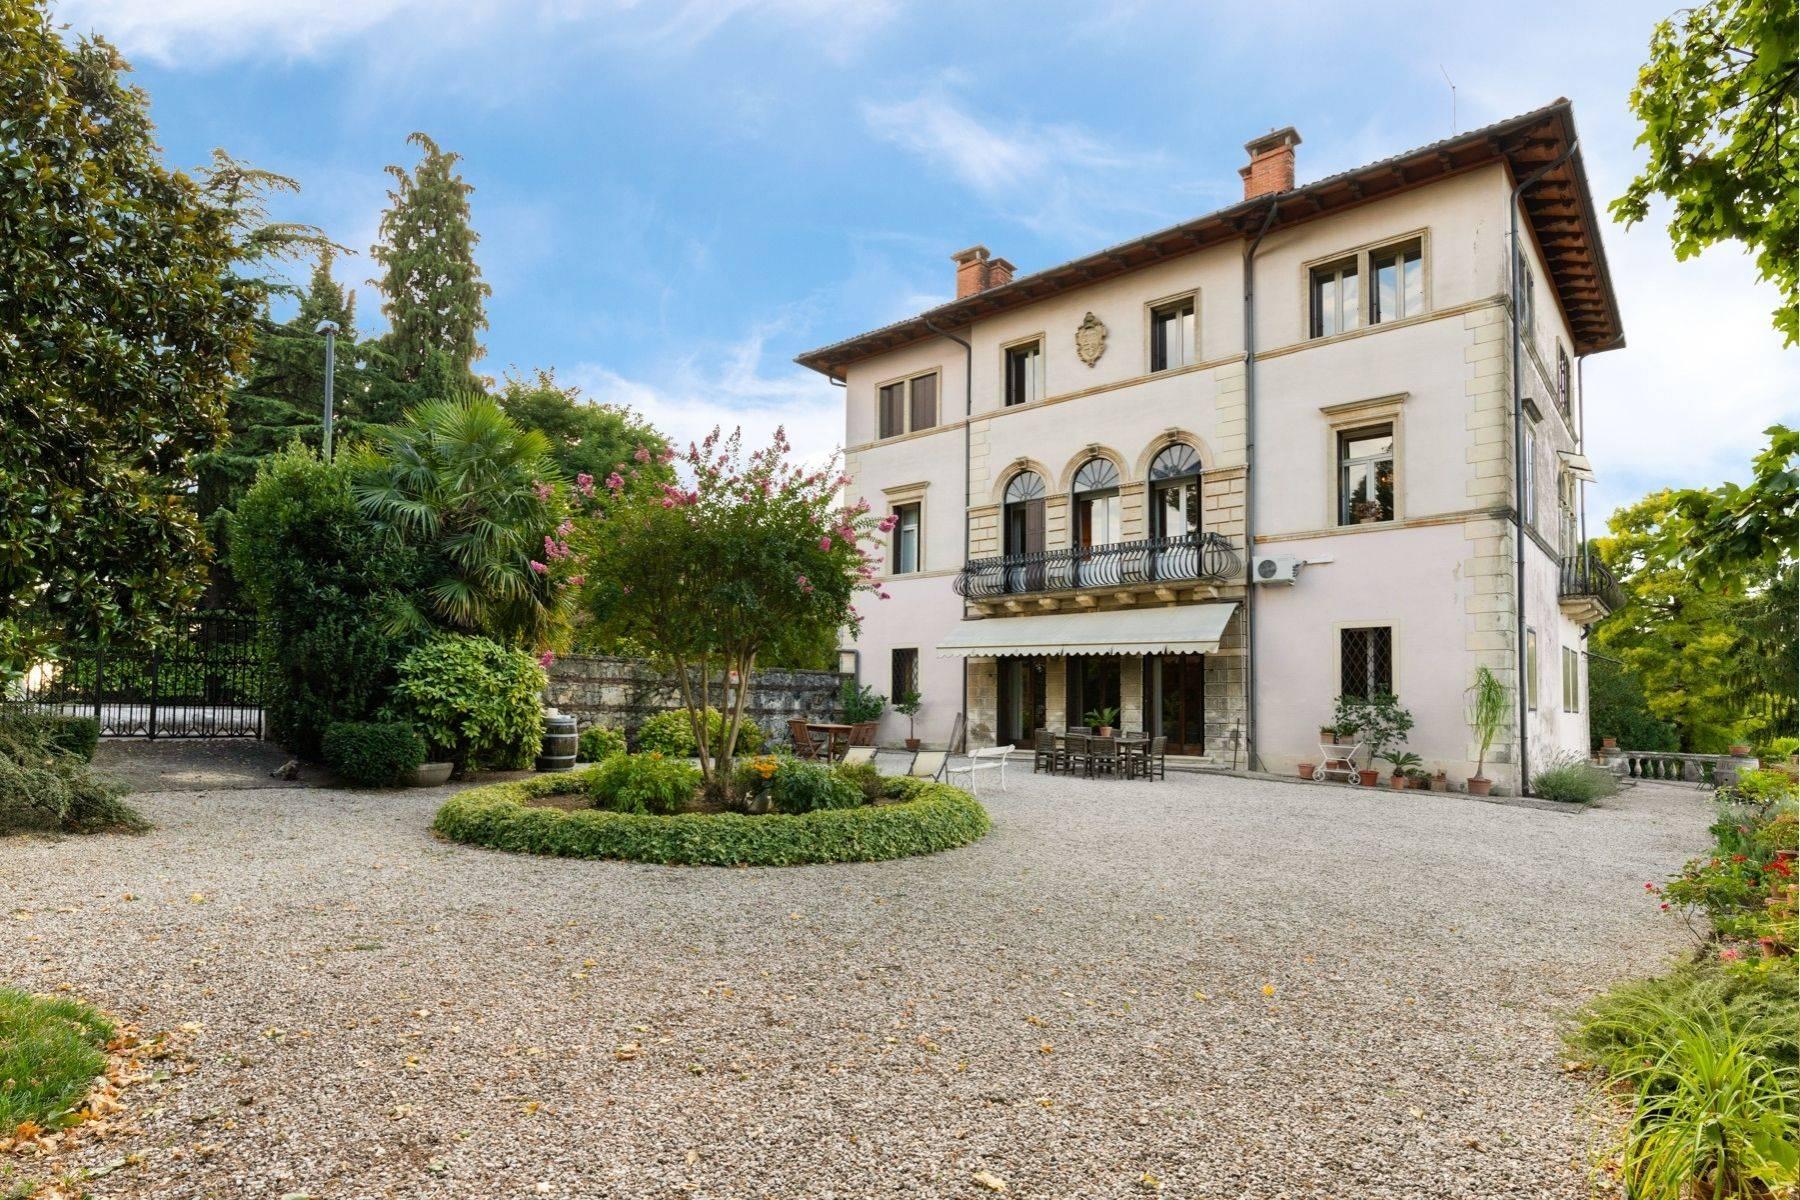 Elegant historic villa with private park on top of Monte Berico - 1